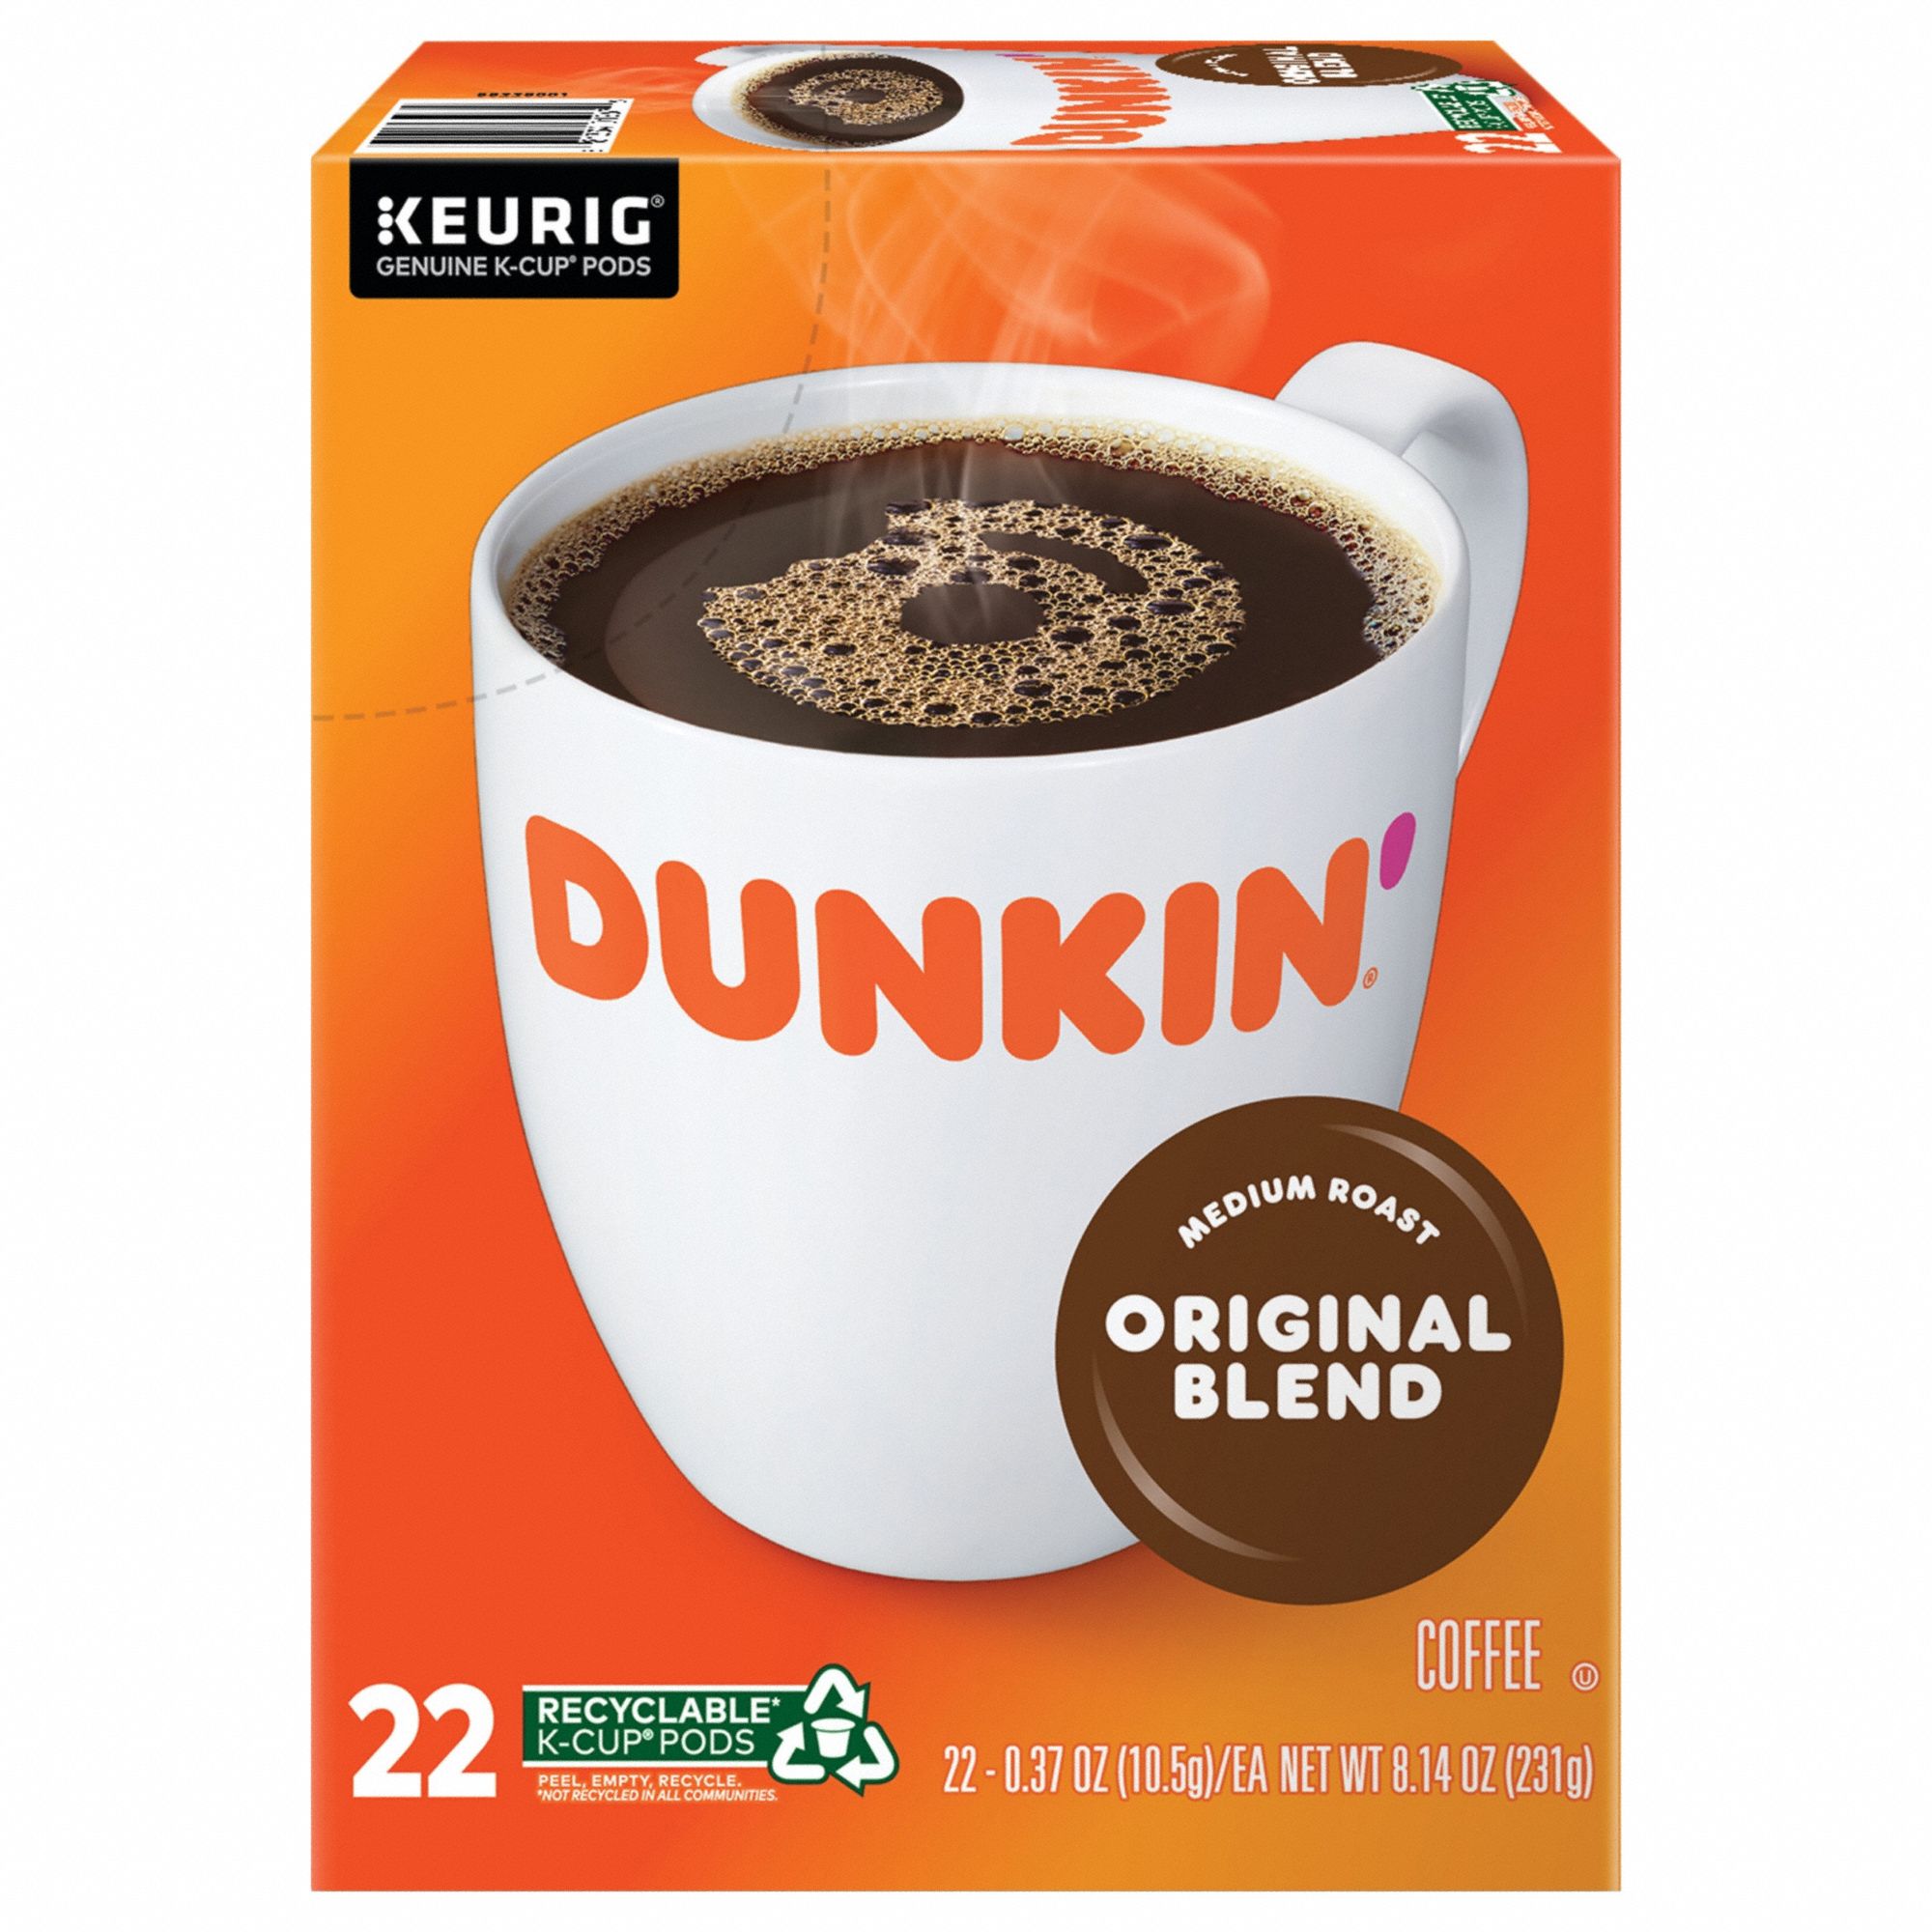 Coffee K-Cup: Caffeinated, Original, Pod, 0.37 oz Pack Wt, 8.14 oz Net Wt, 22 PK